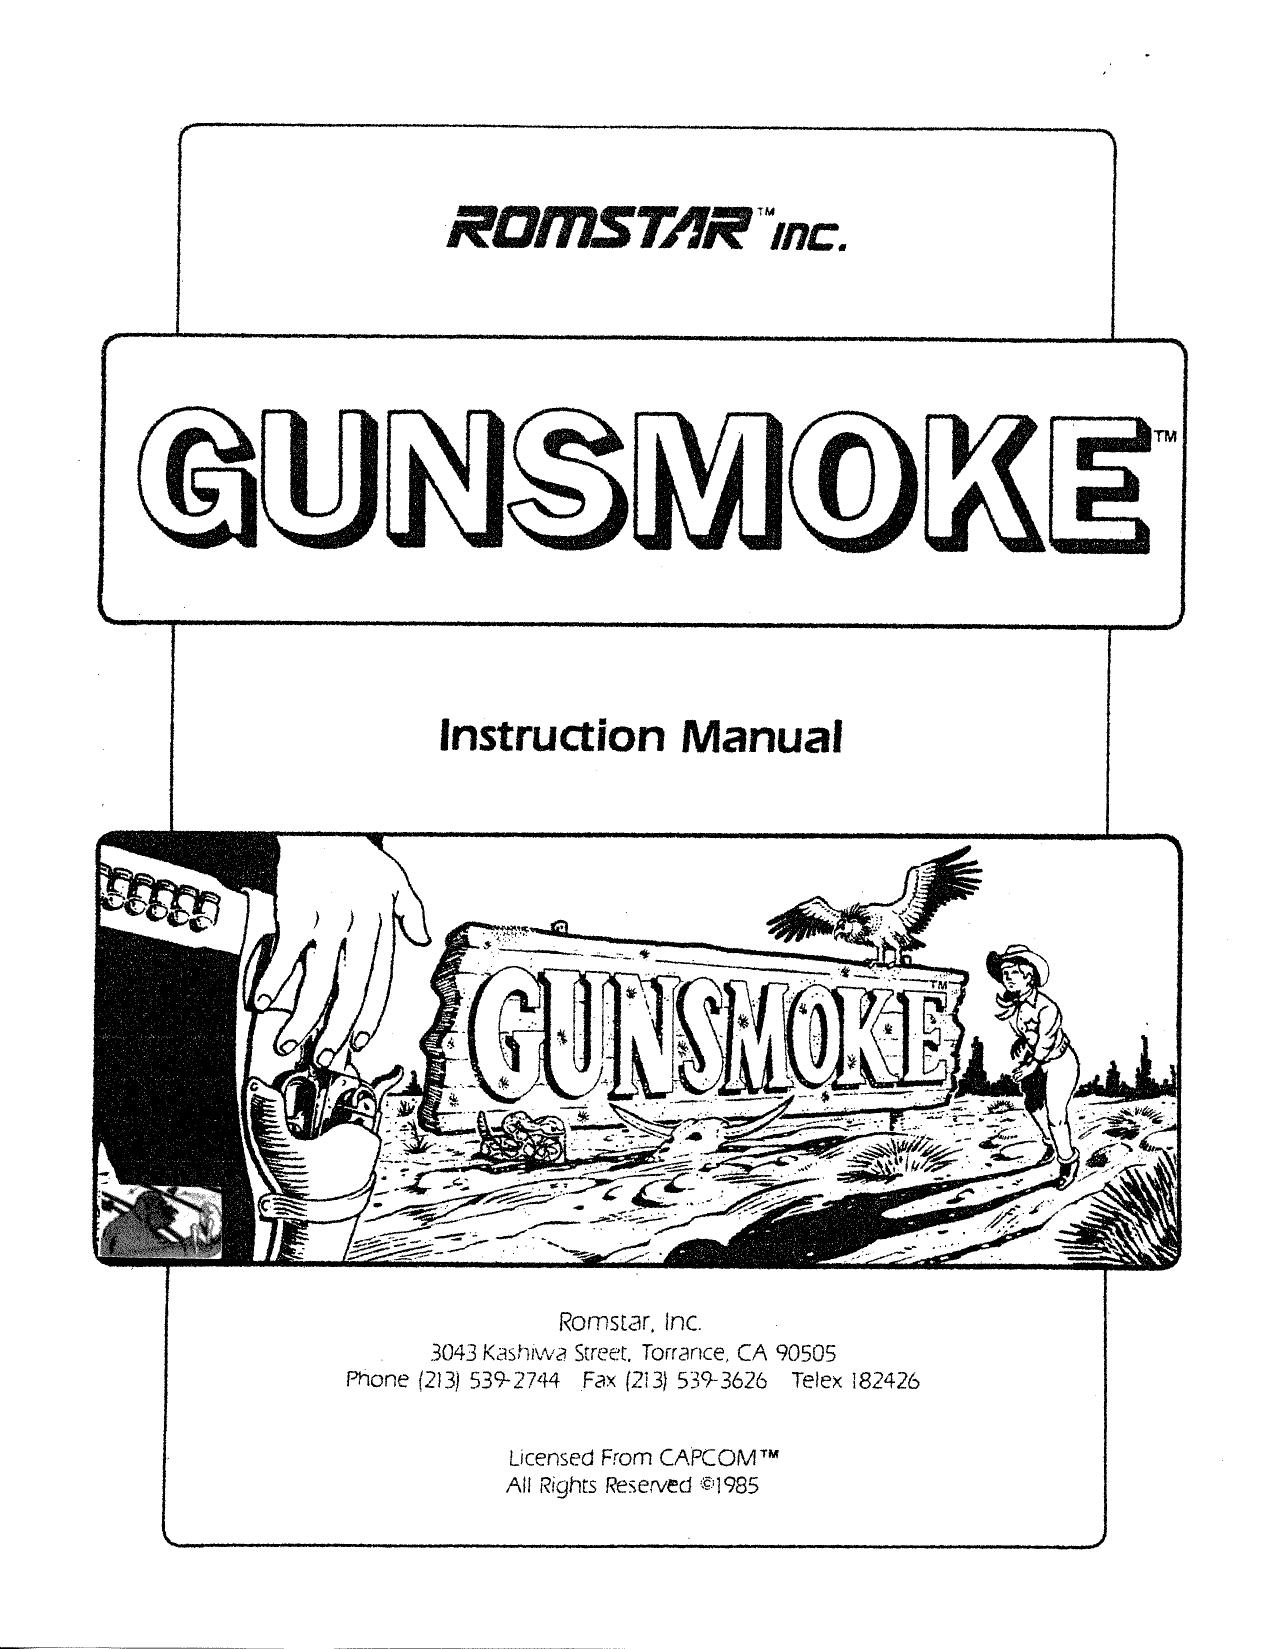 GunSmoke Manual